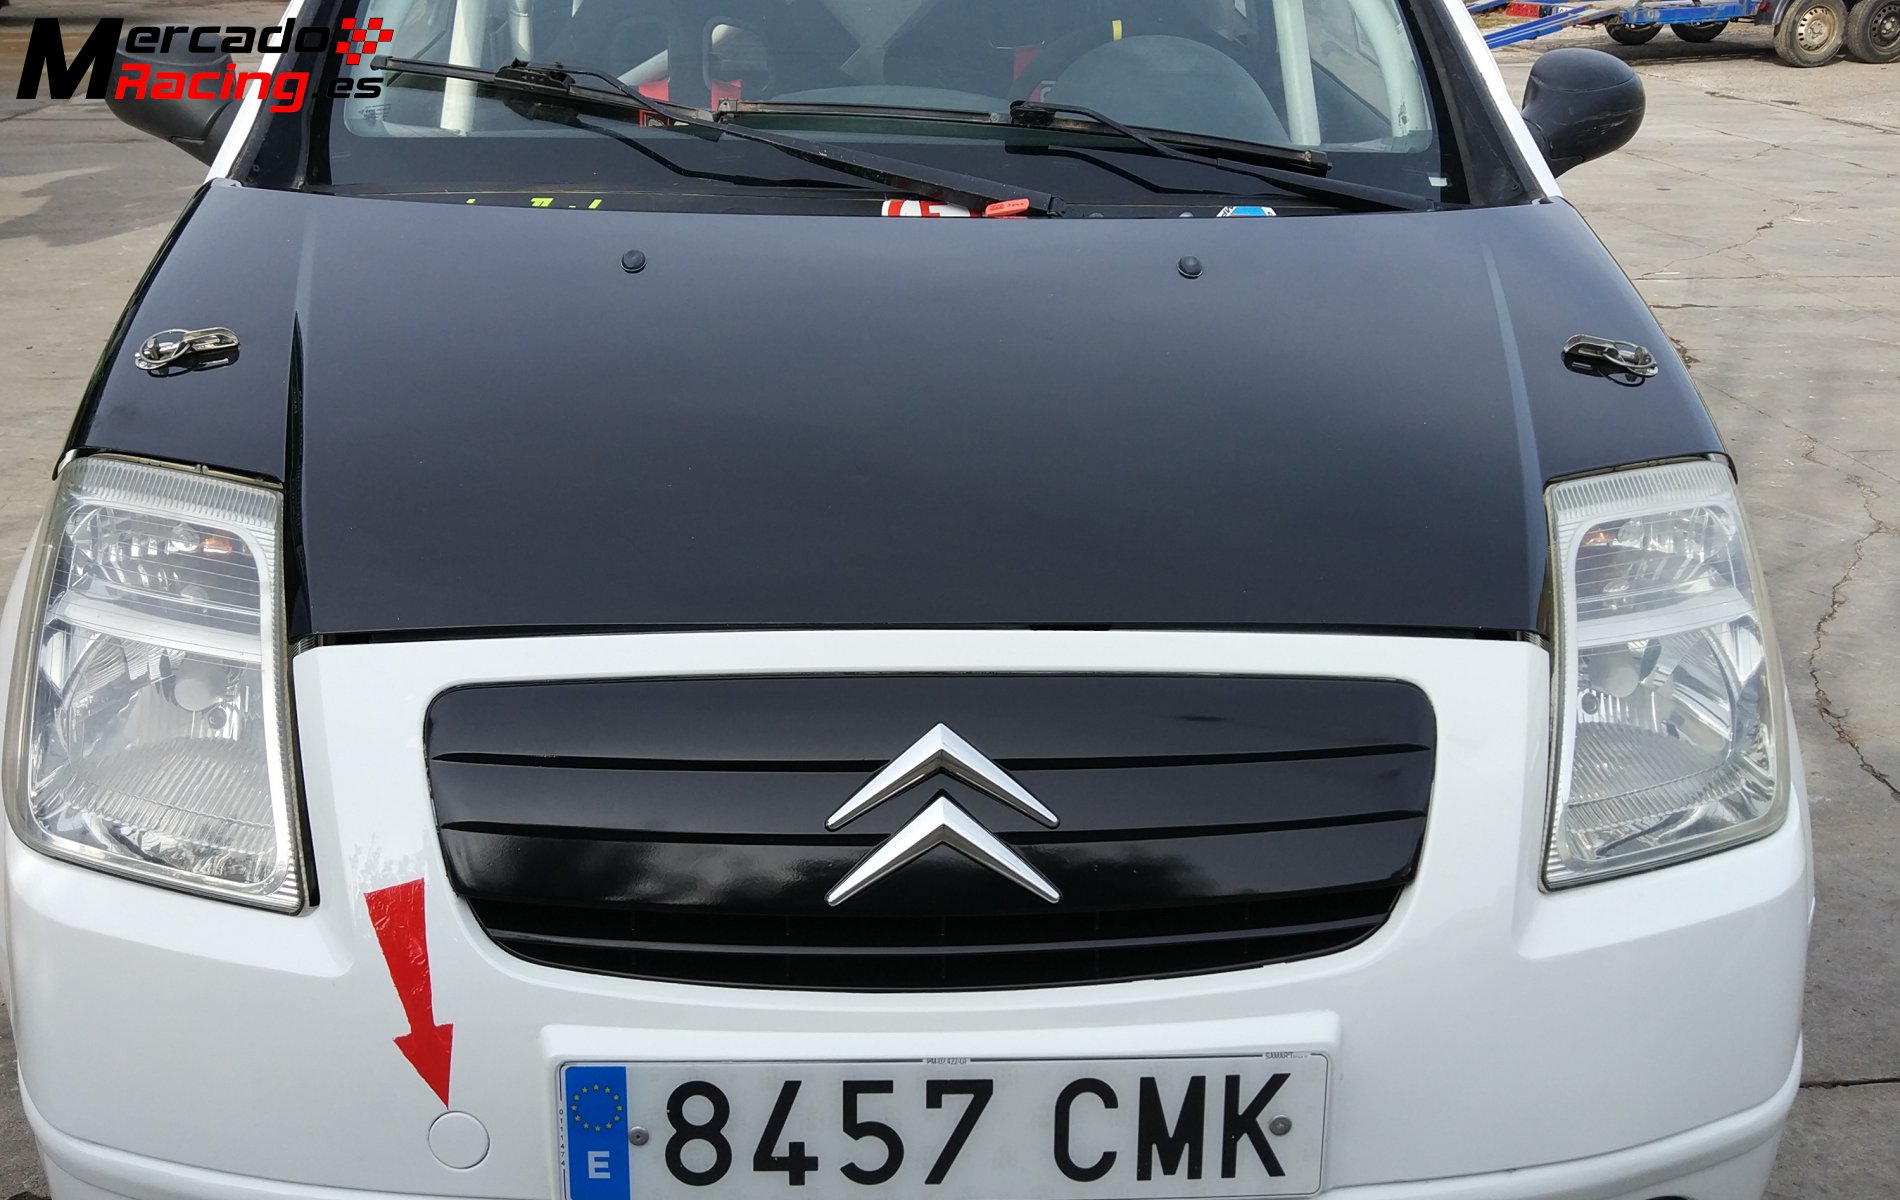 Citroën c2 1600cc 175cv